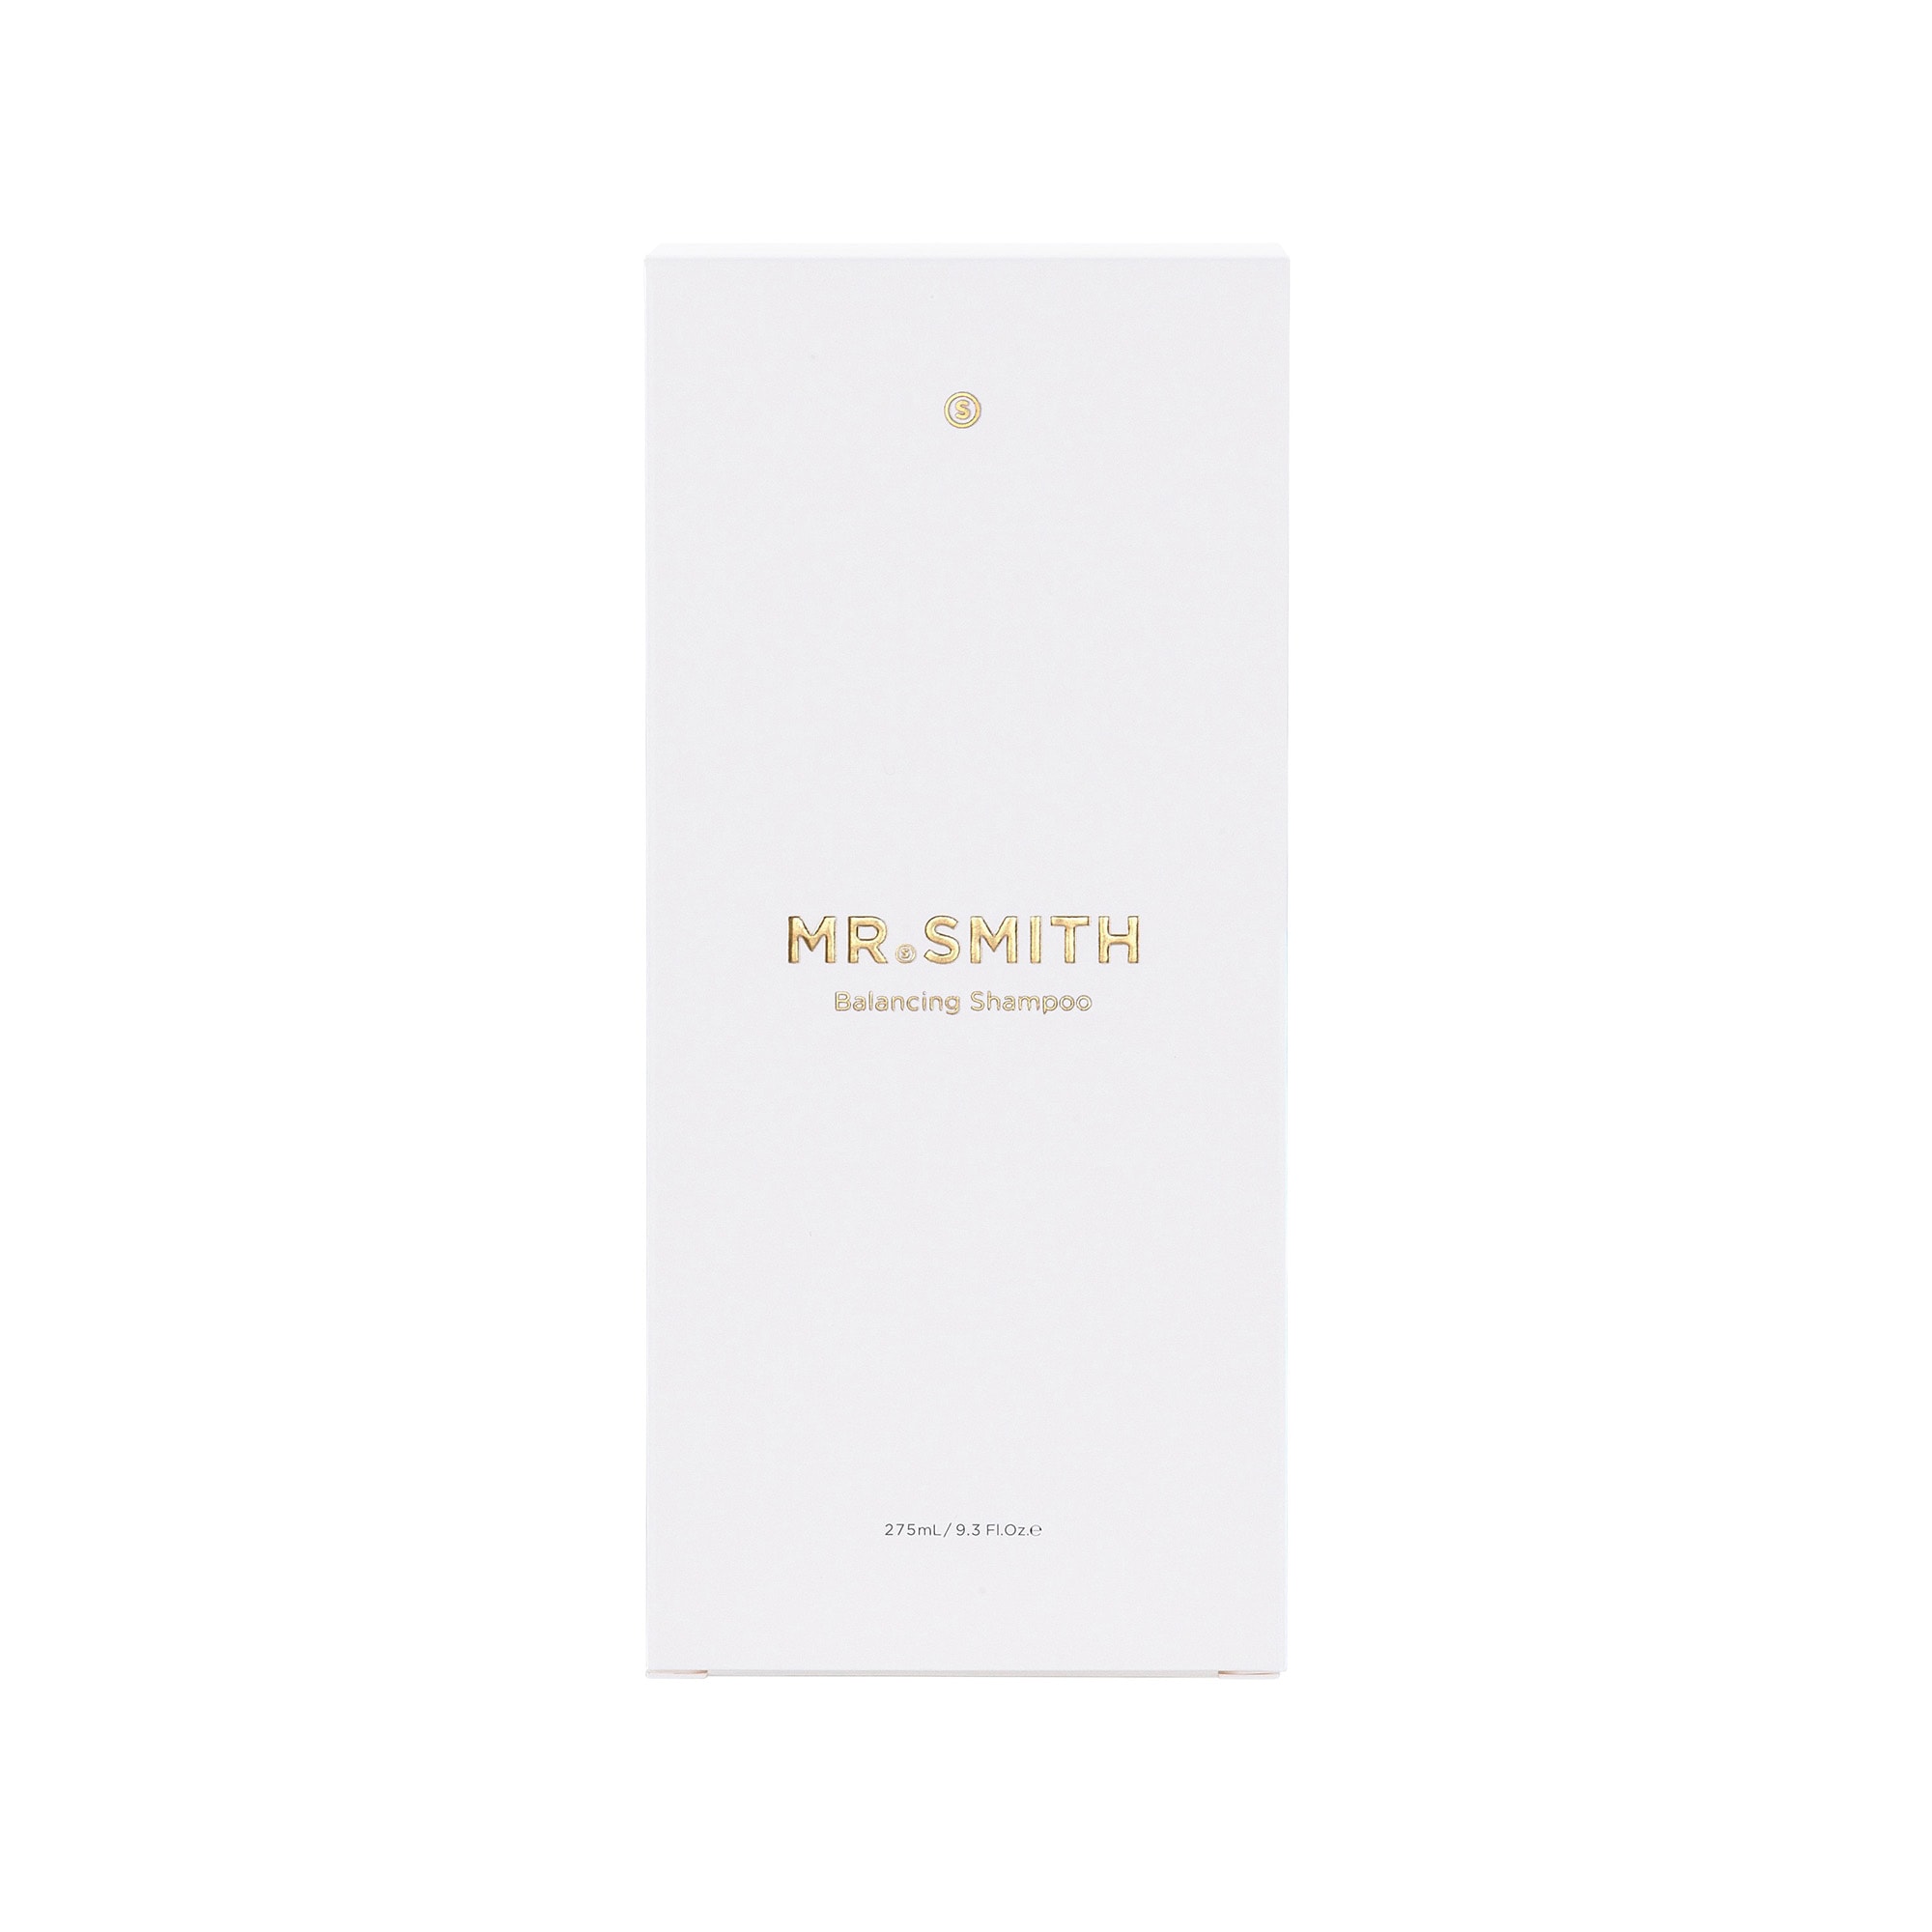 Mr.Smith Balancing Shampoo Carton